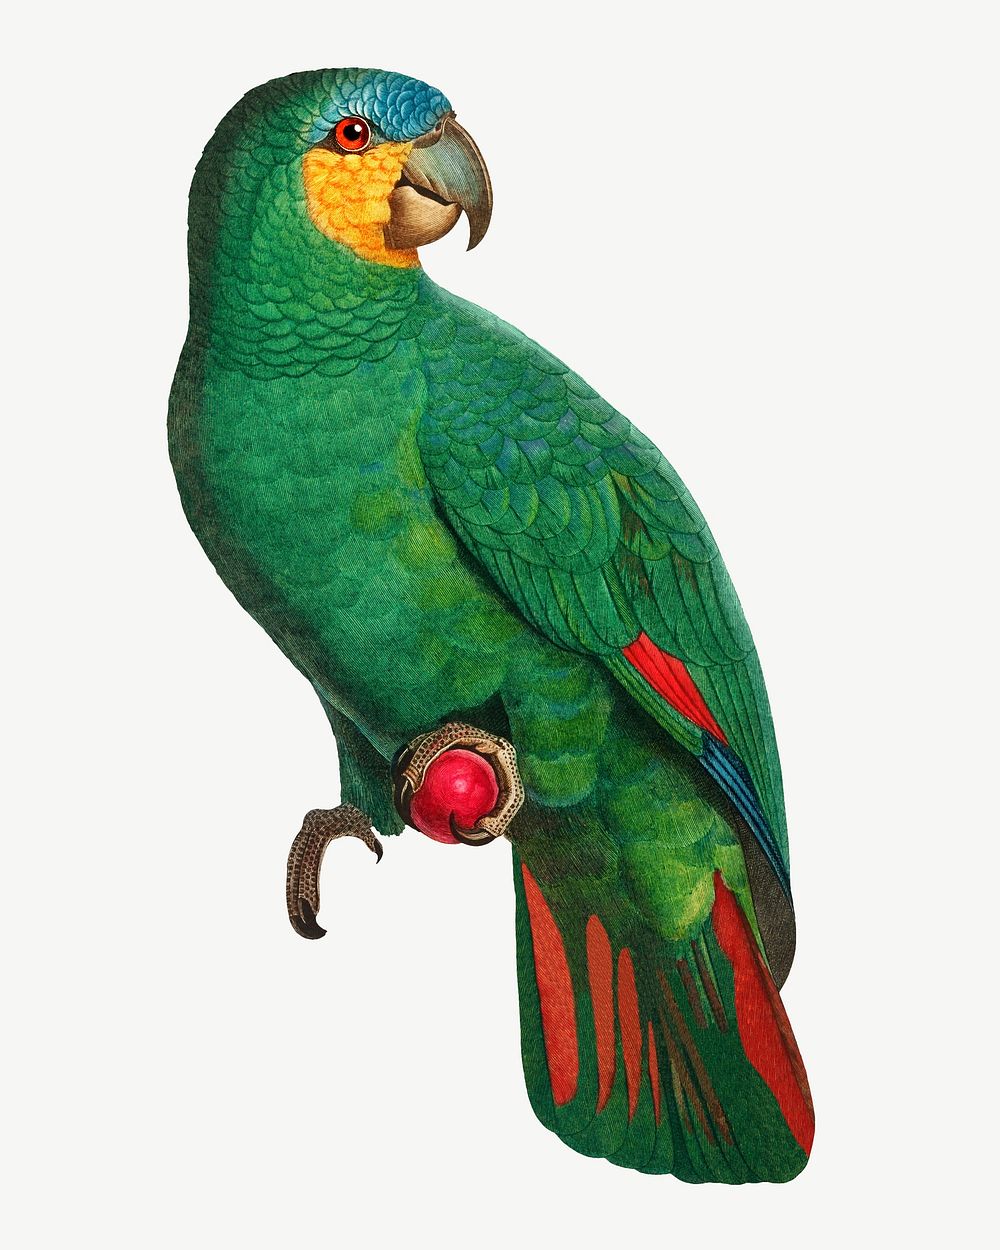 Orange-winged Amazon parrot bird, vintage animal collage element psd